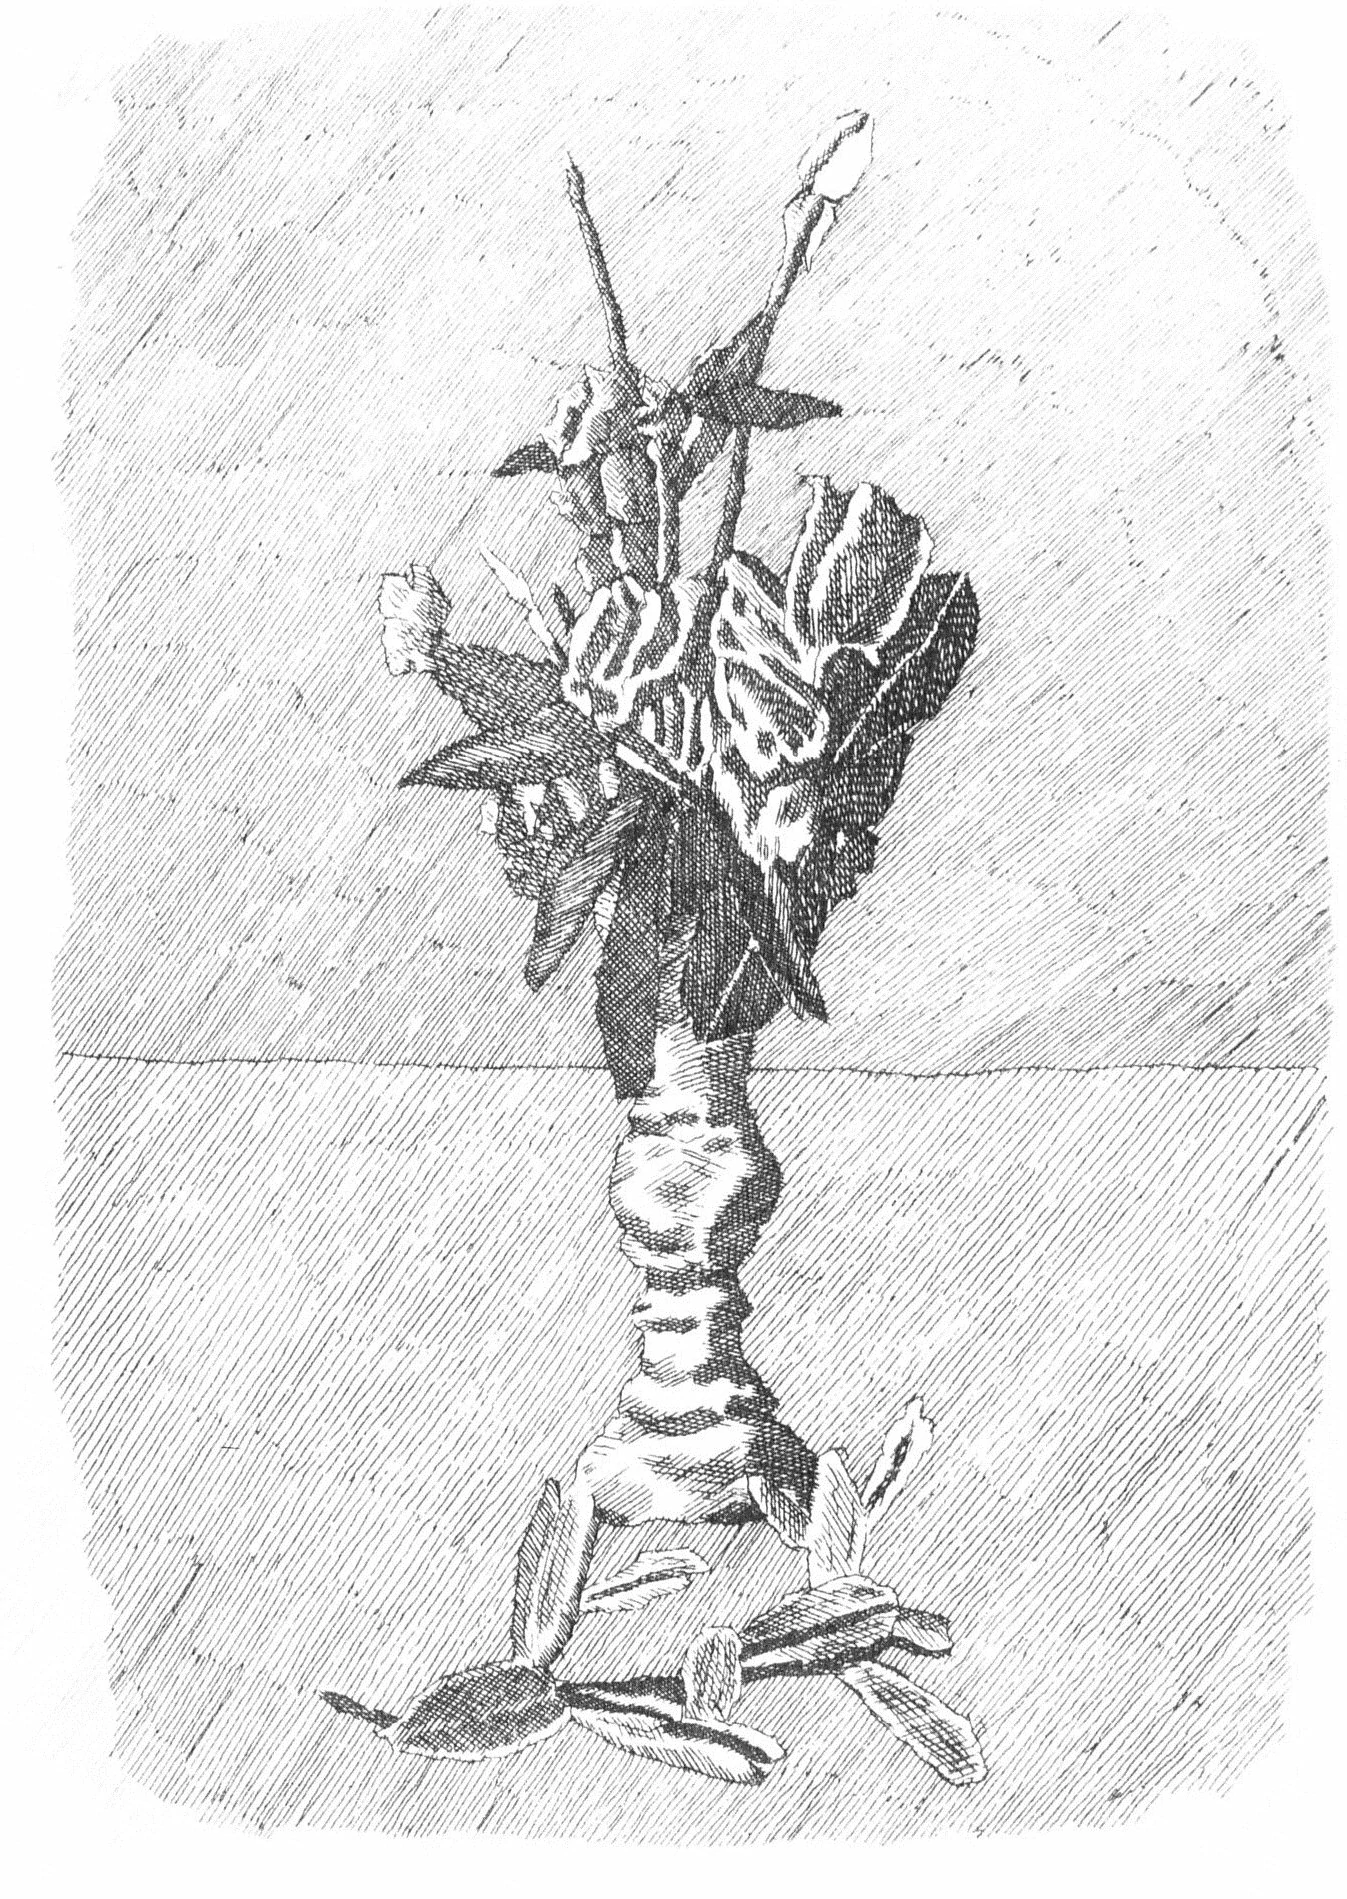 Budding Roses in a Vase, Giorgio Morandi